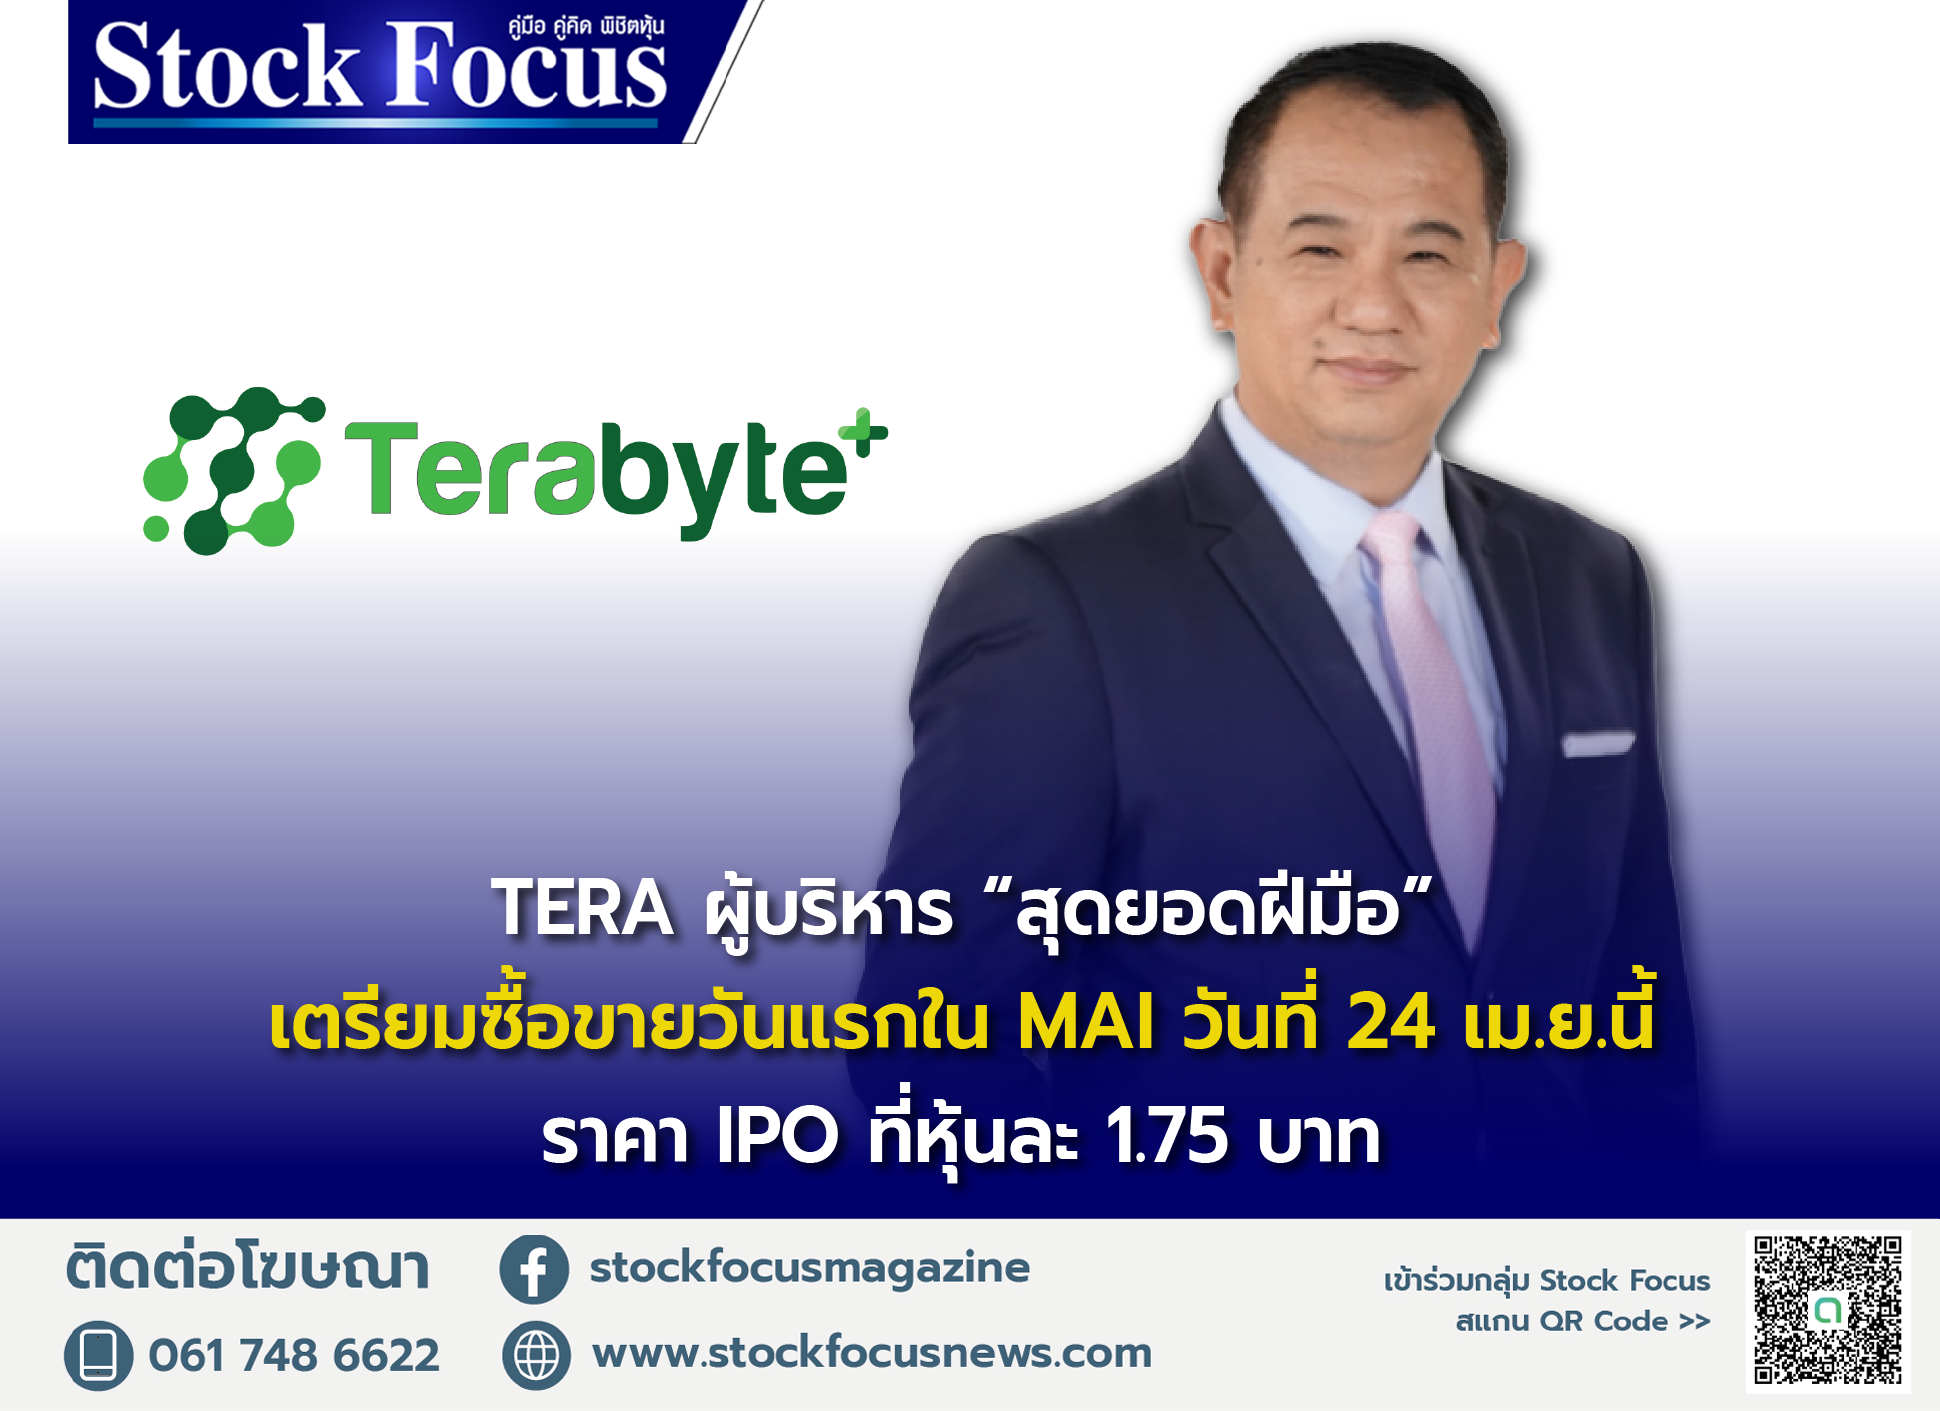 You are currently viewing TERA ผู้บริหาร “สุดยอดฝีมือ!!” เตรียมซื้อขายวันแรกในตลาดหลักทรัพย์ เอ็ม เอ ไอ (mai) ในวันที่ 24 เม.ย.นี้